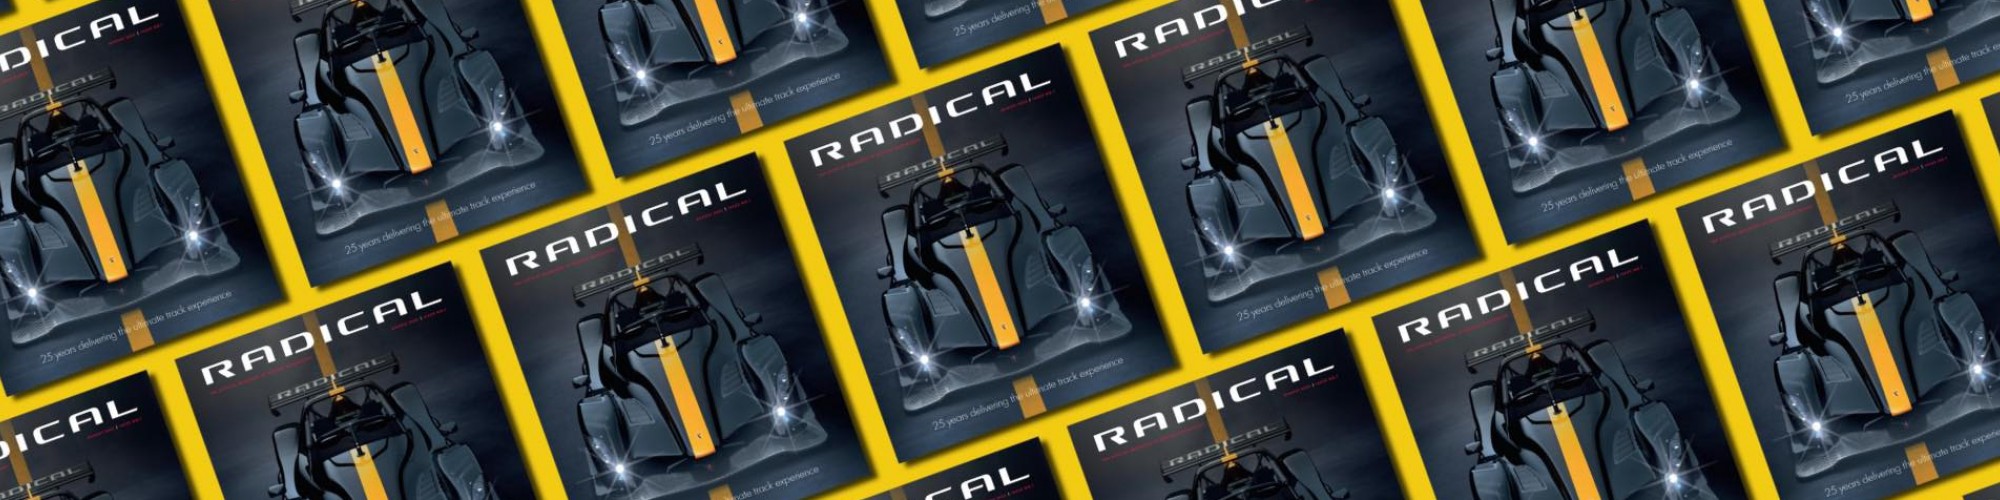 Radical Motorsport